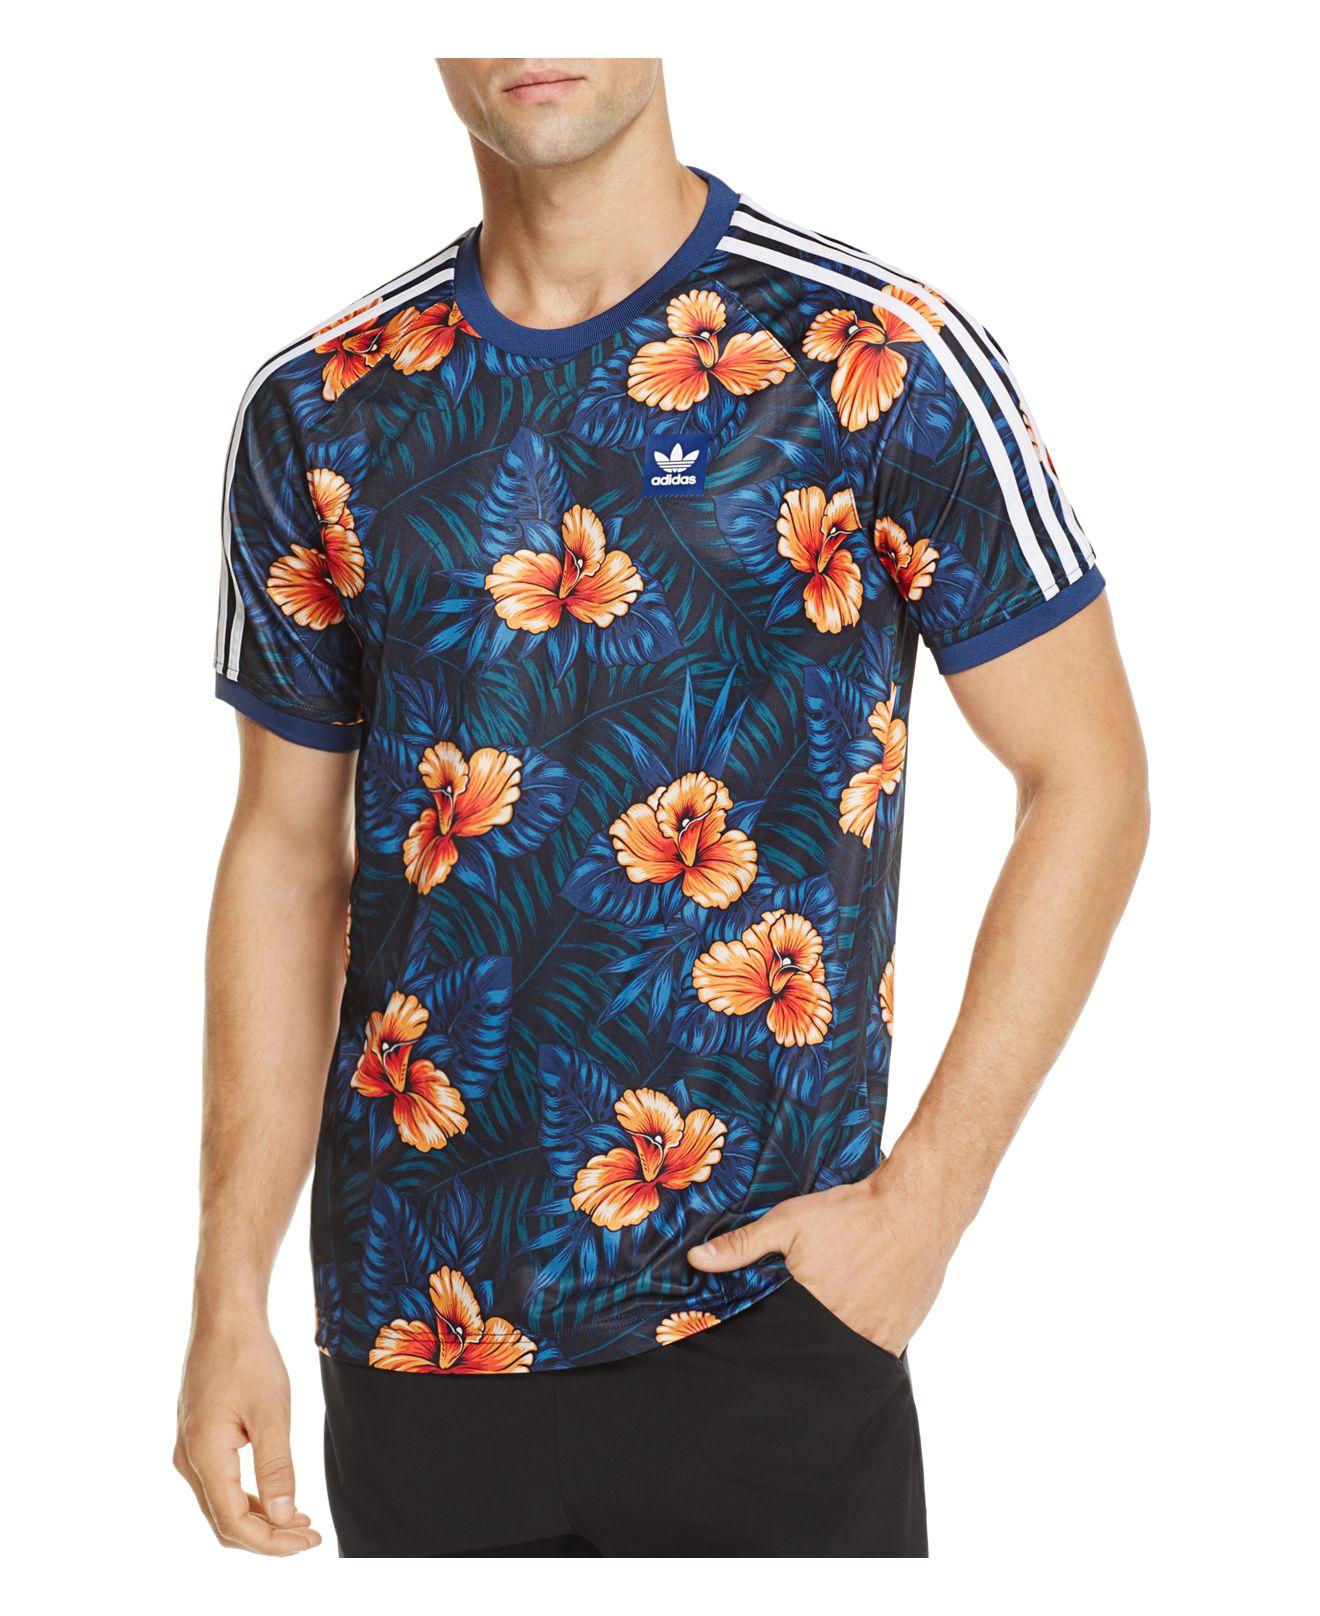 adidas flower shirt